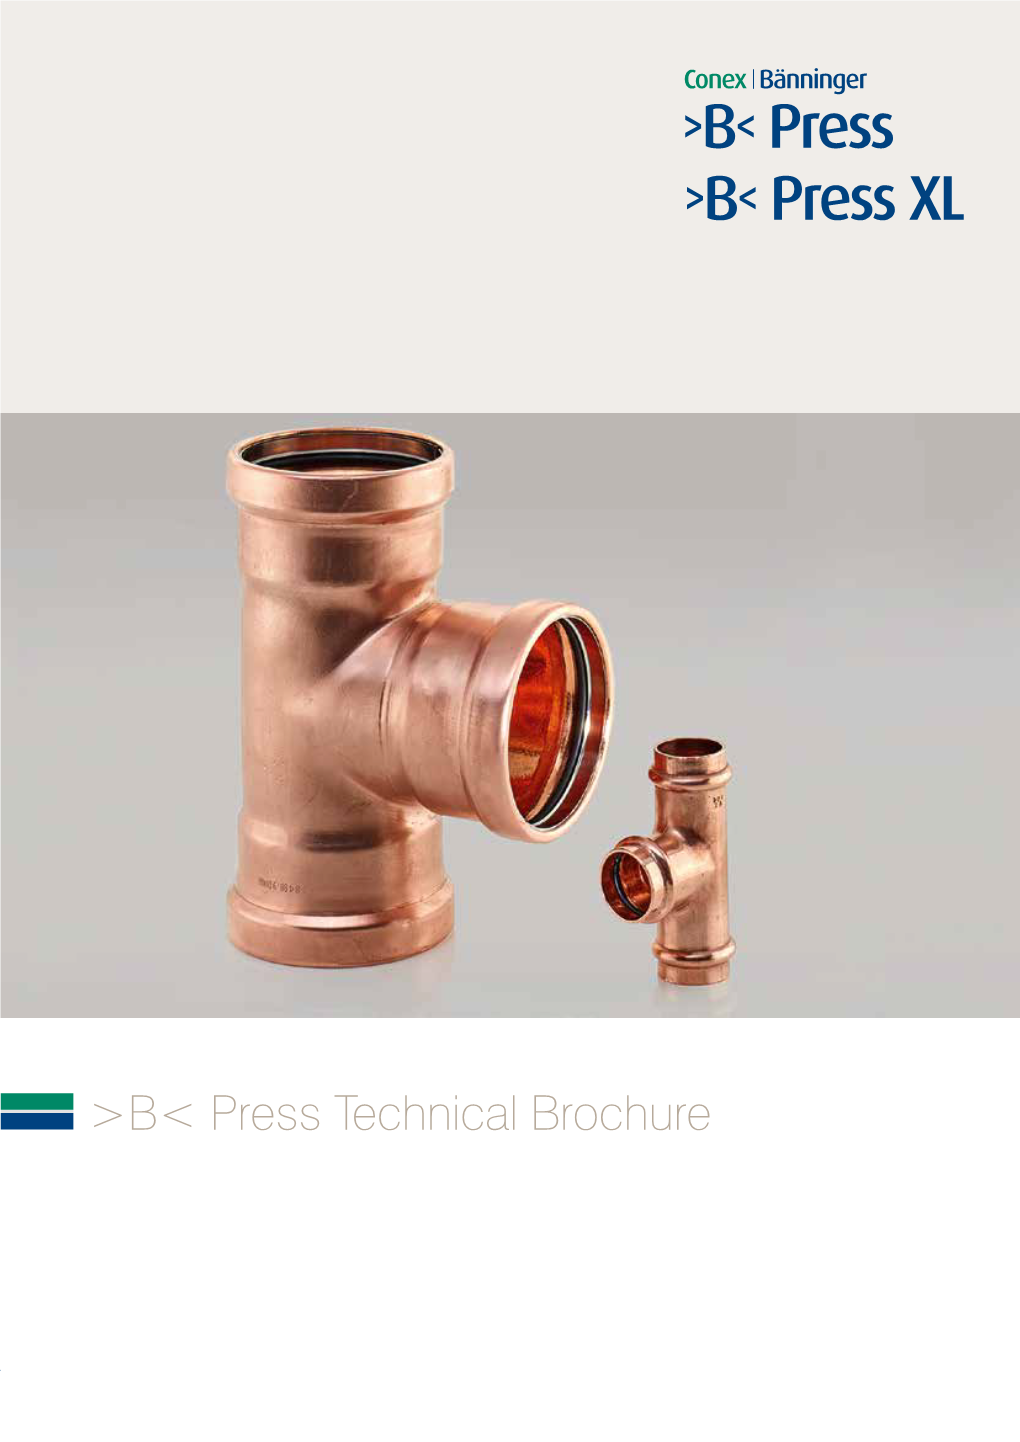 B&lt; Press Technical Brochure